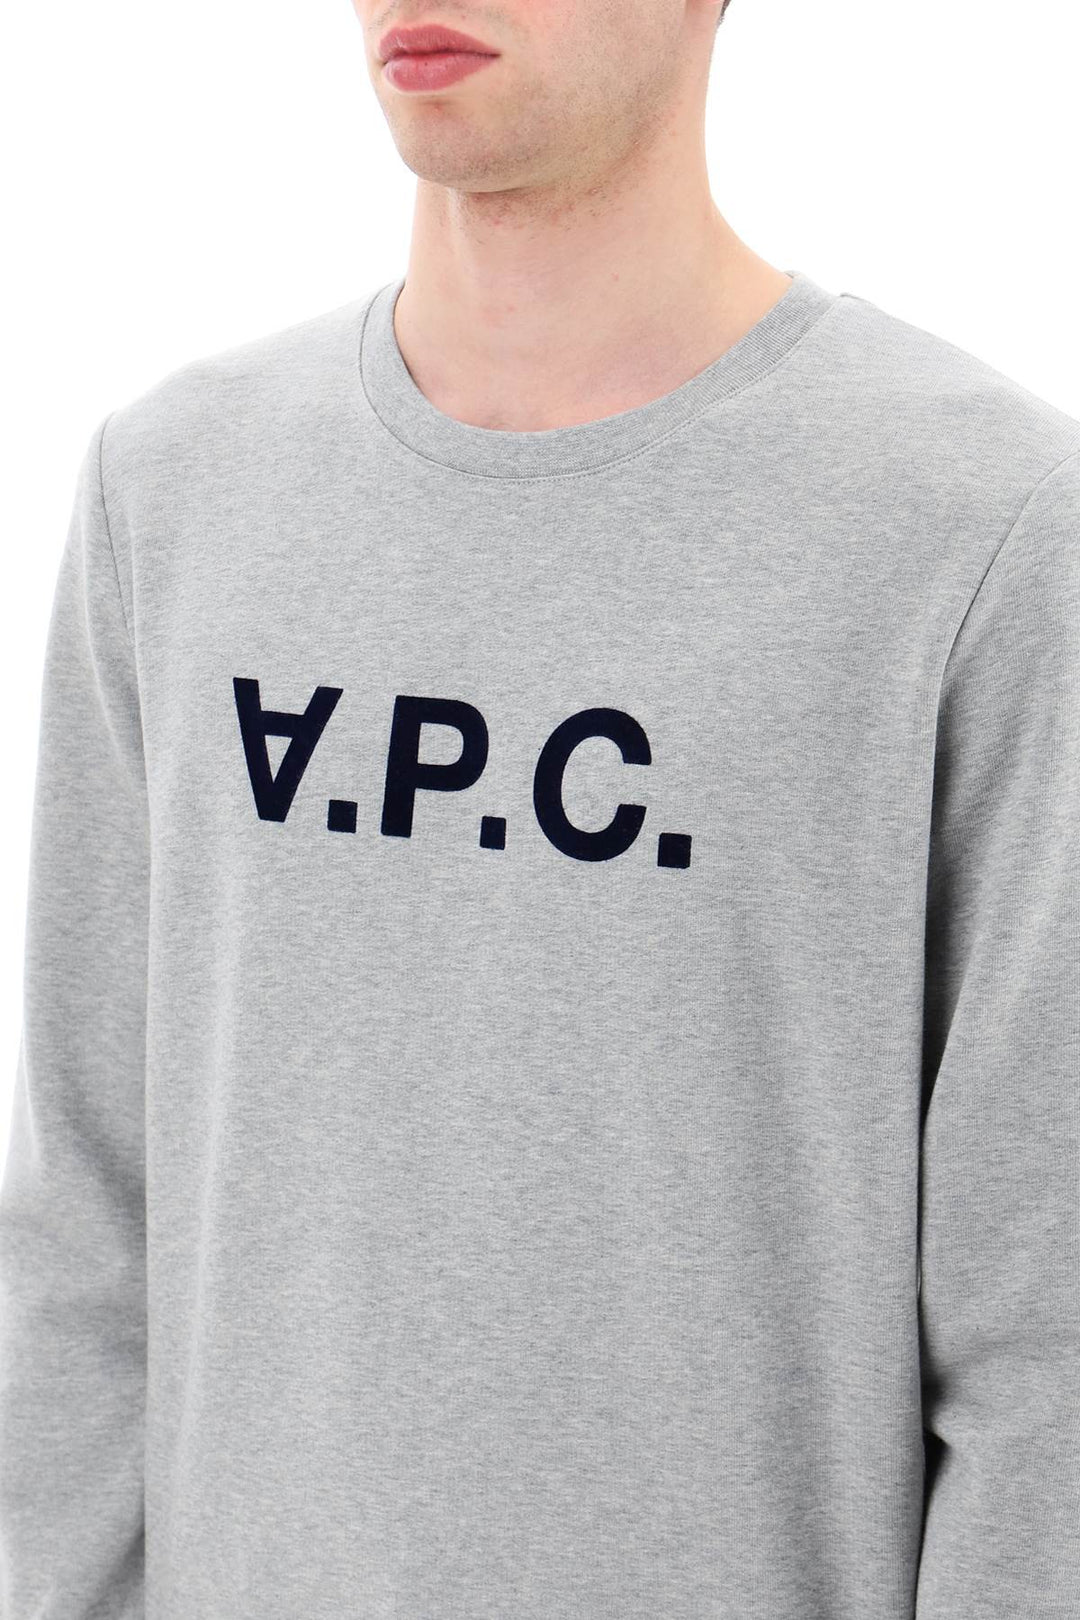 A.P.C. Flock V.P.C. Logo Sweatshirt   Grey